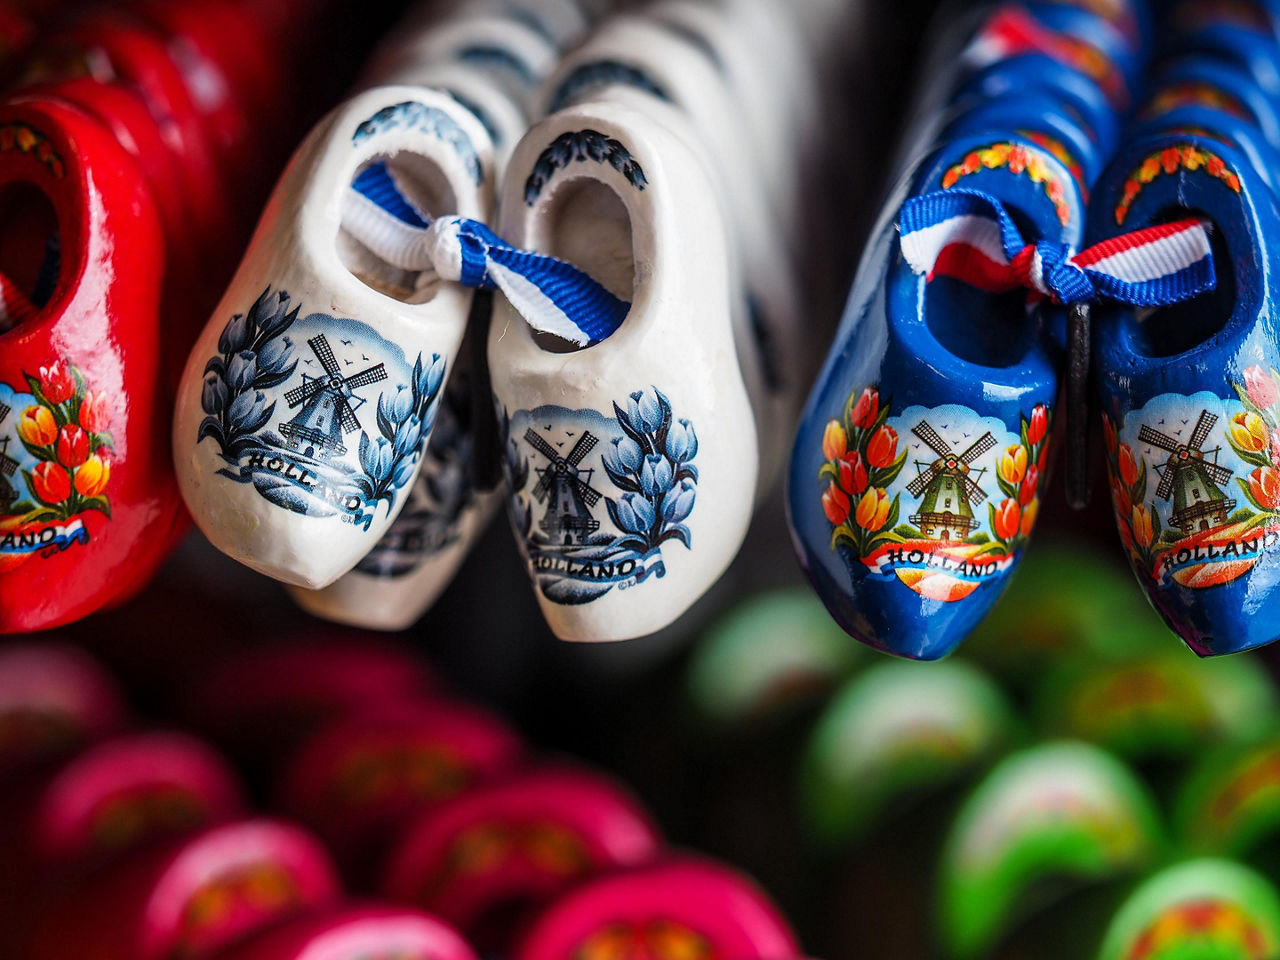 An assortment of souvenir ceramic shoes in Rotterdam, Netherlands